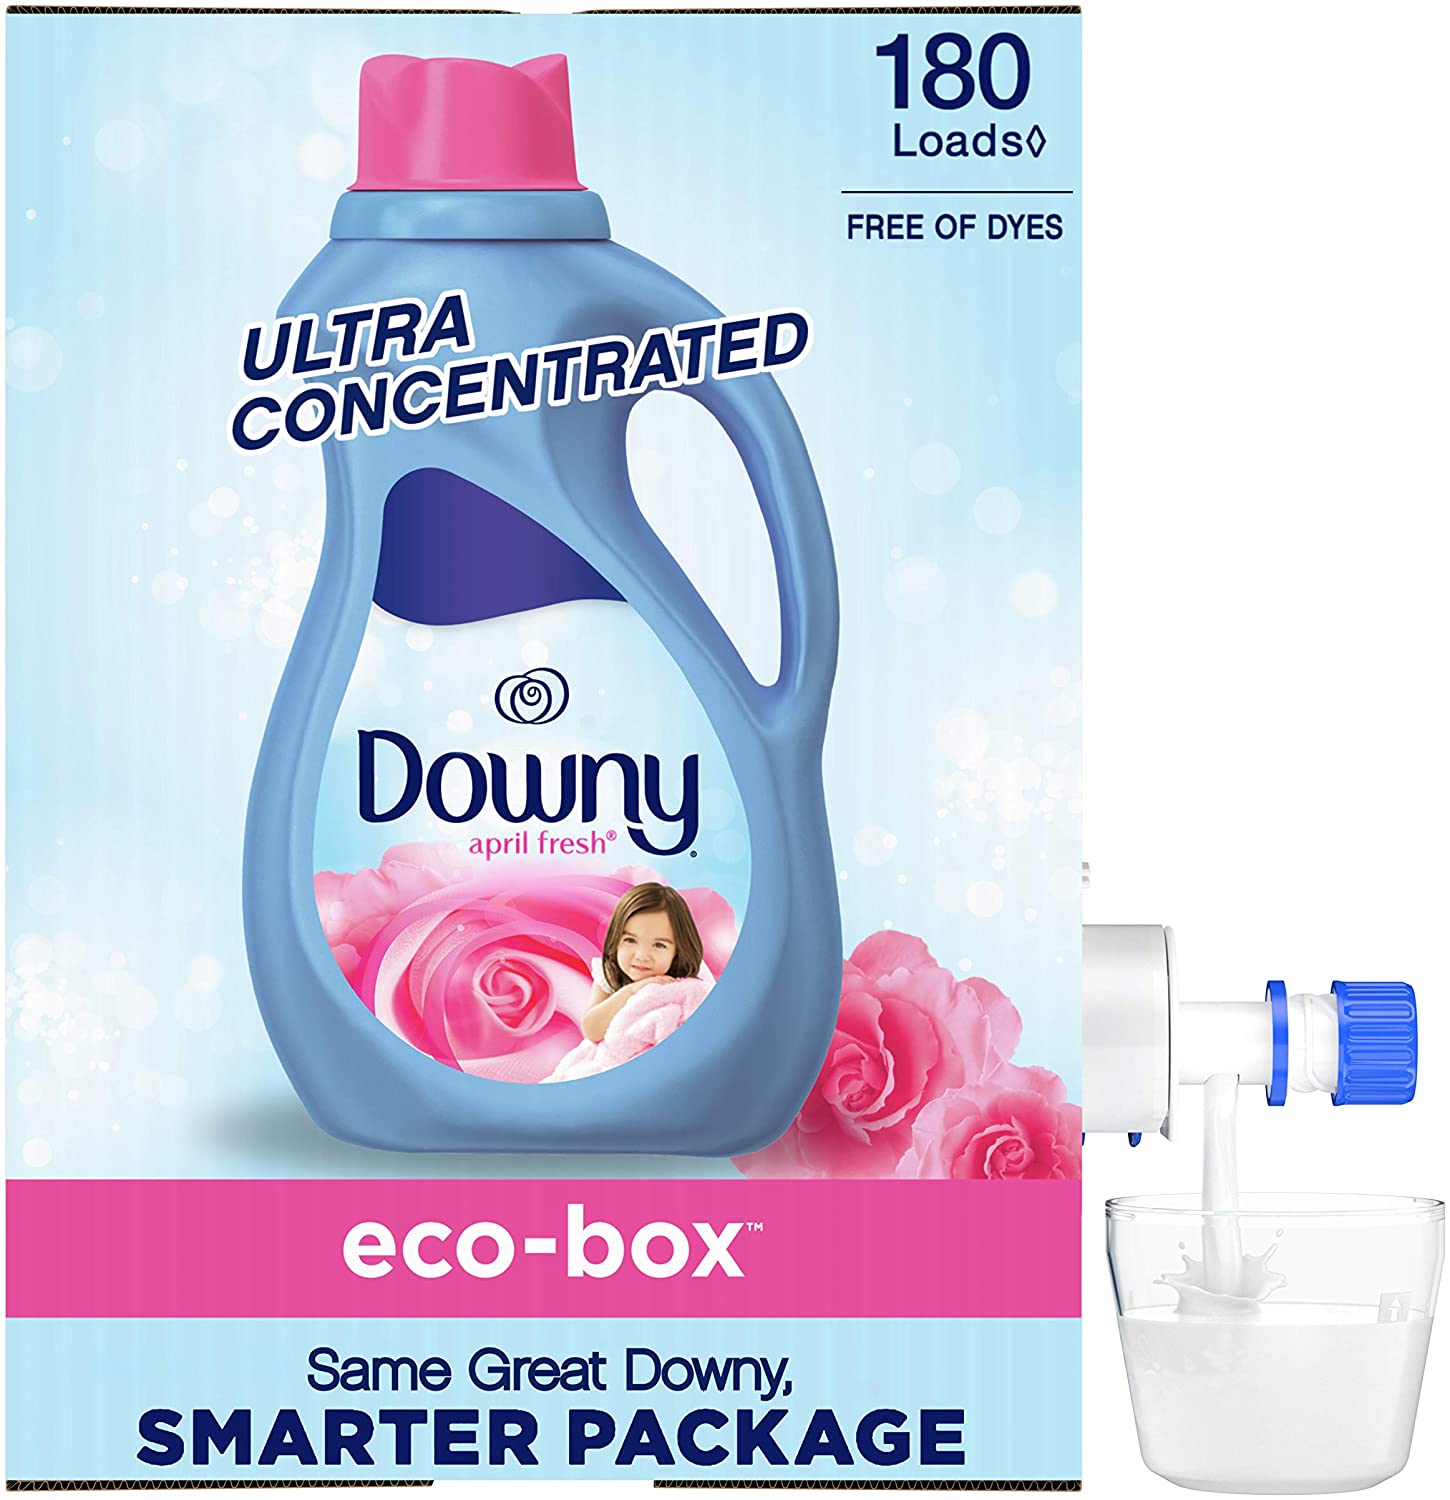 Downy Fabric Softener Eco Box FREEBIE on Amazon! RUN!